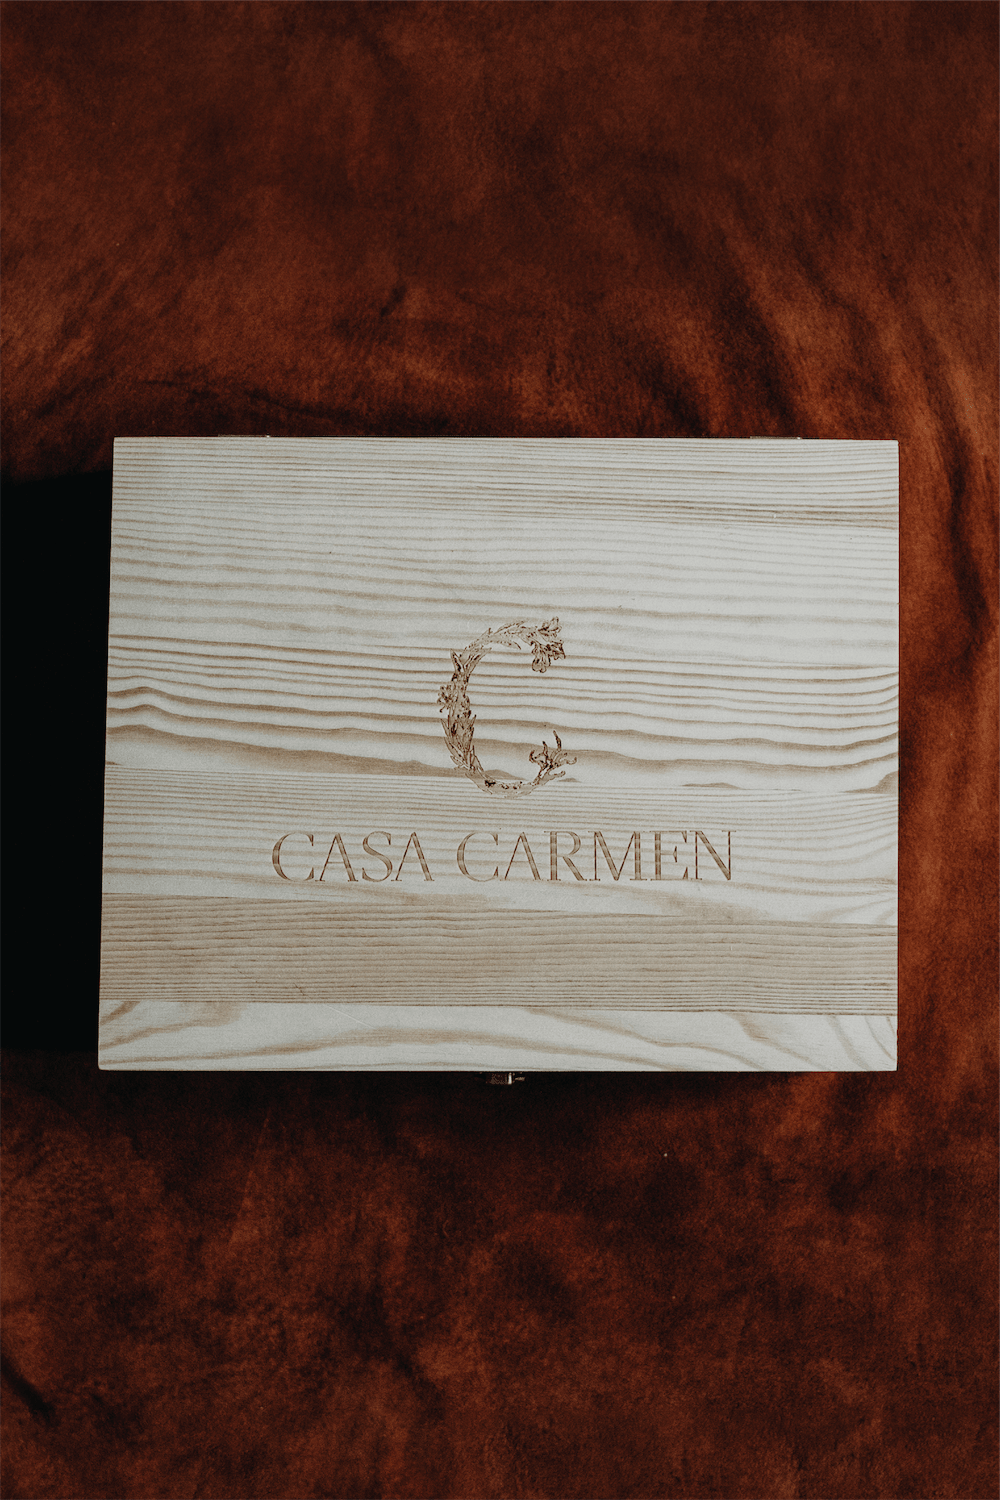 Winter 2022 Letter, Casa Carmen Wines